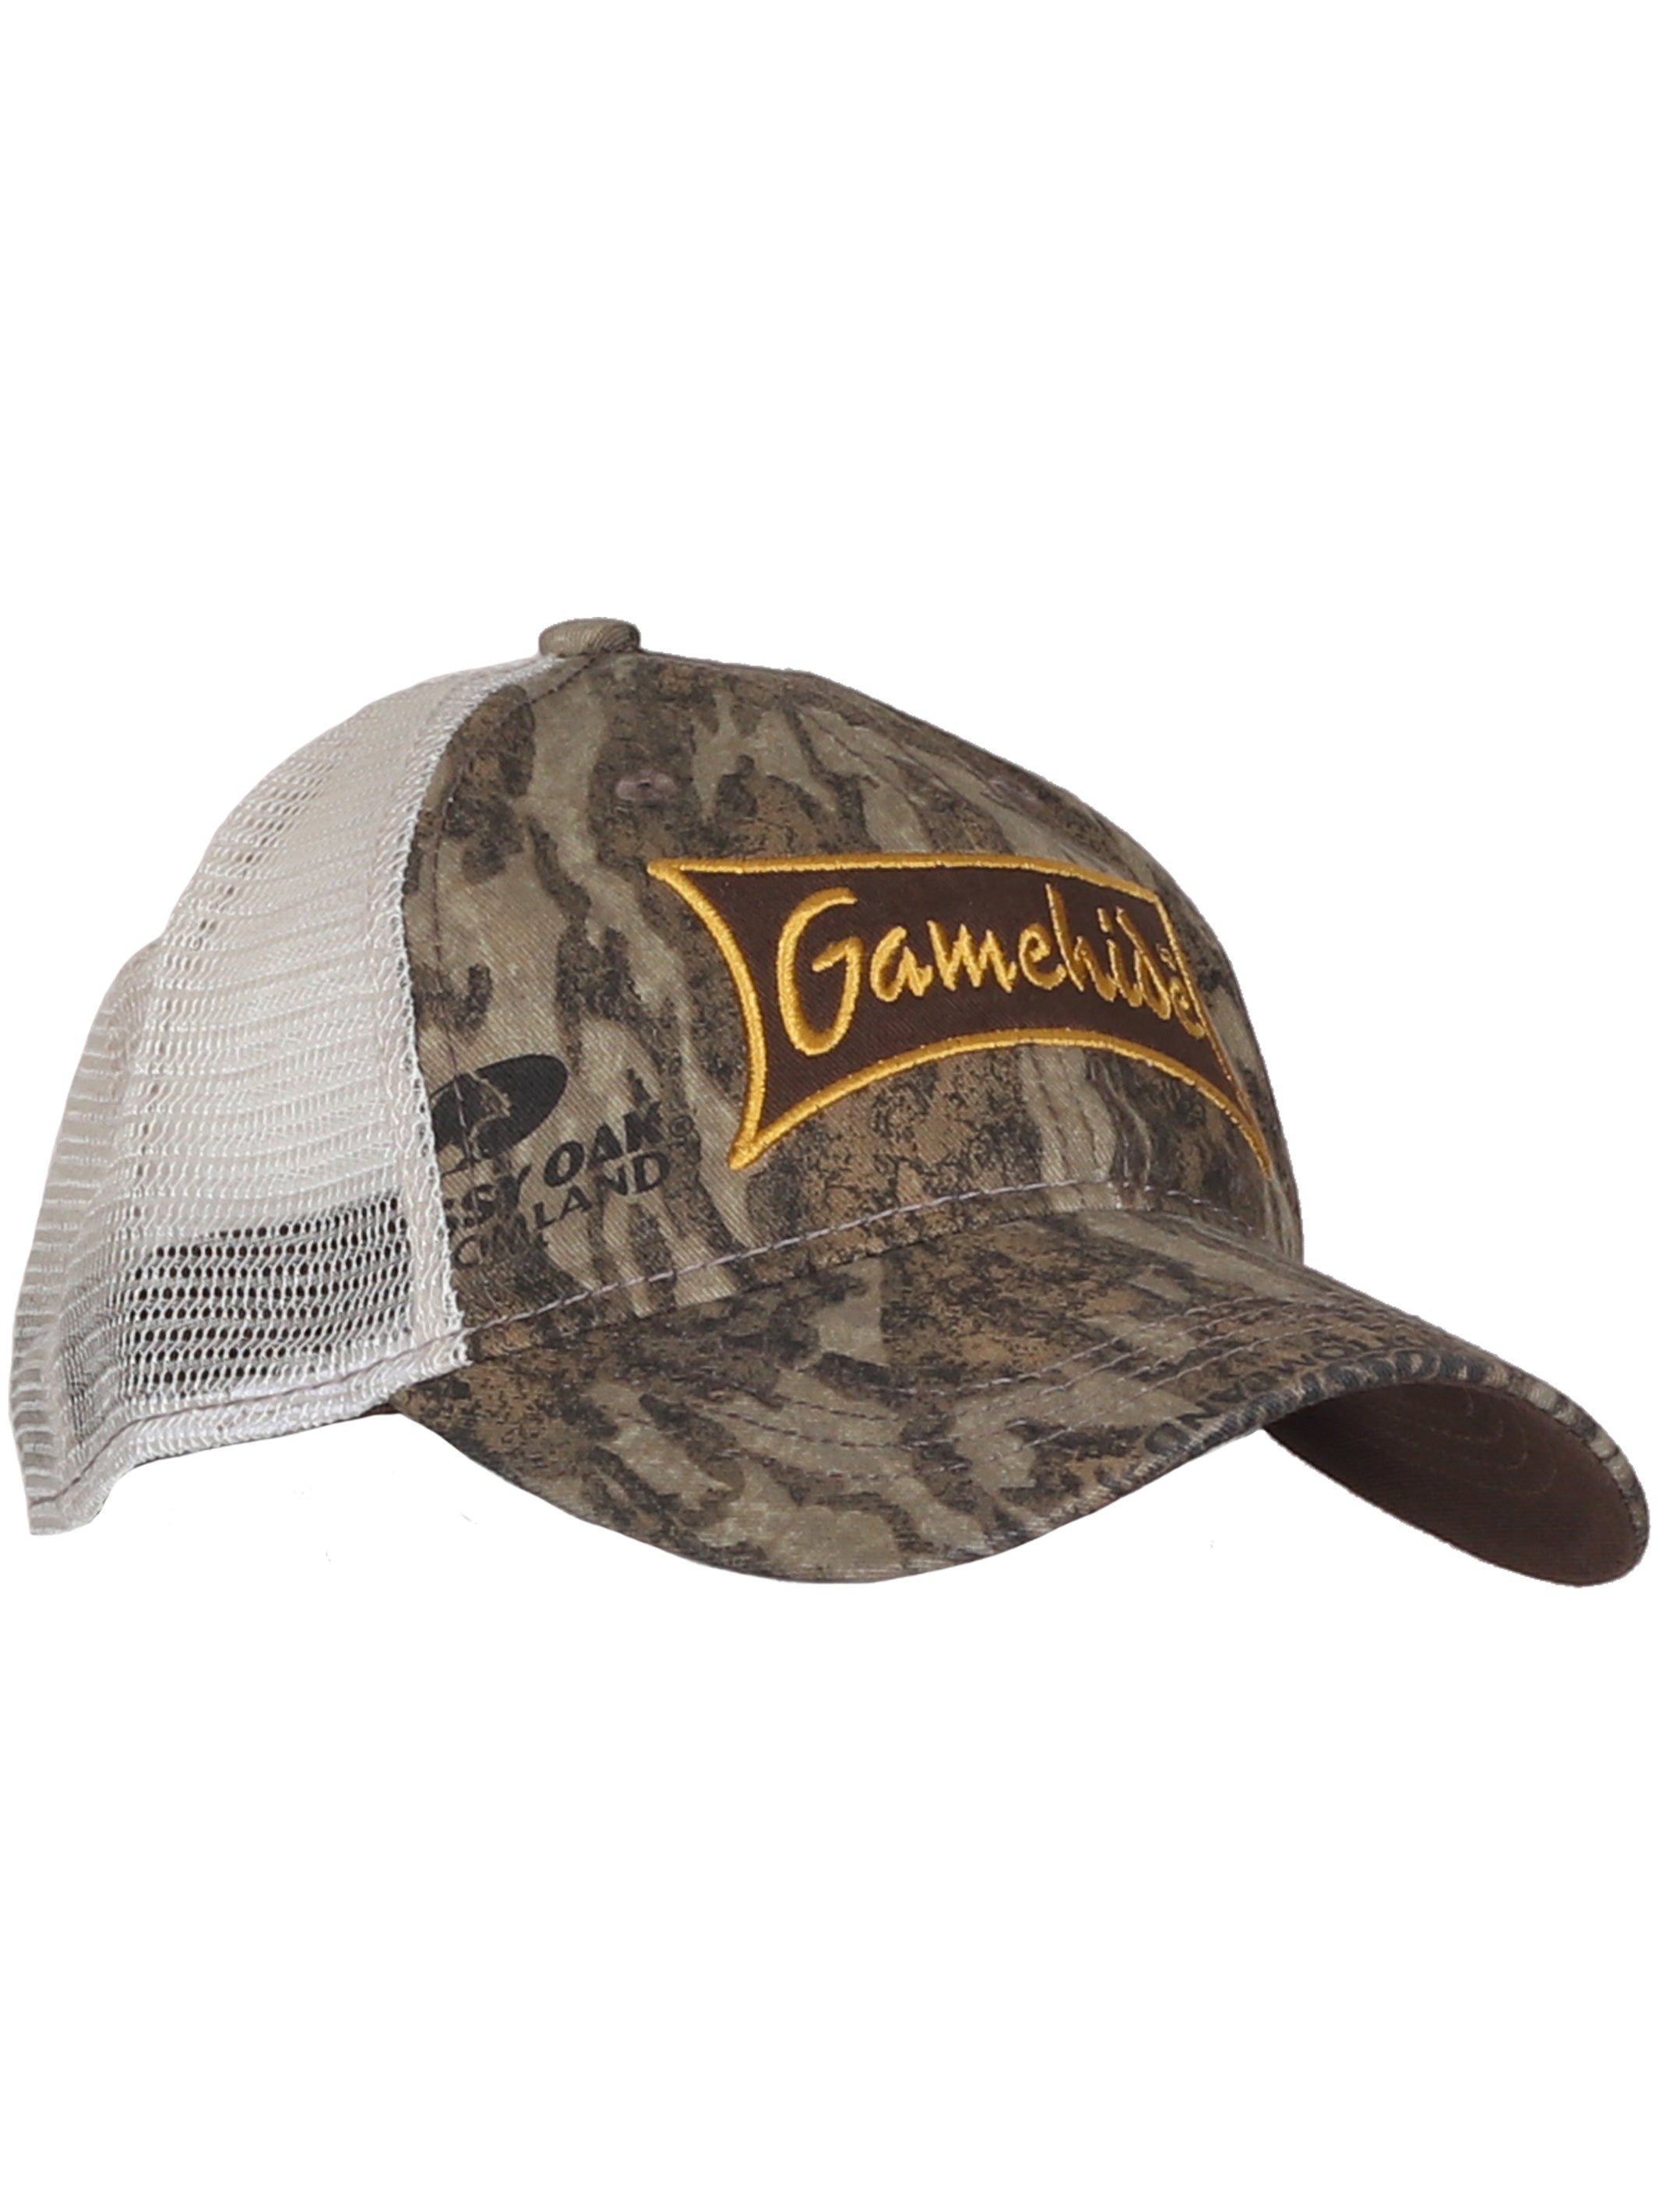 Gamehide jockey hat front (mossy oak new bottomland)